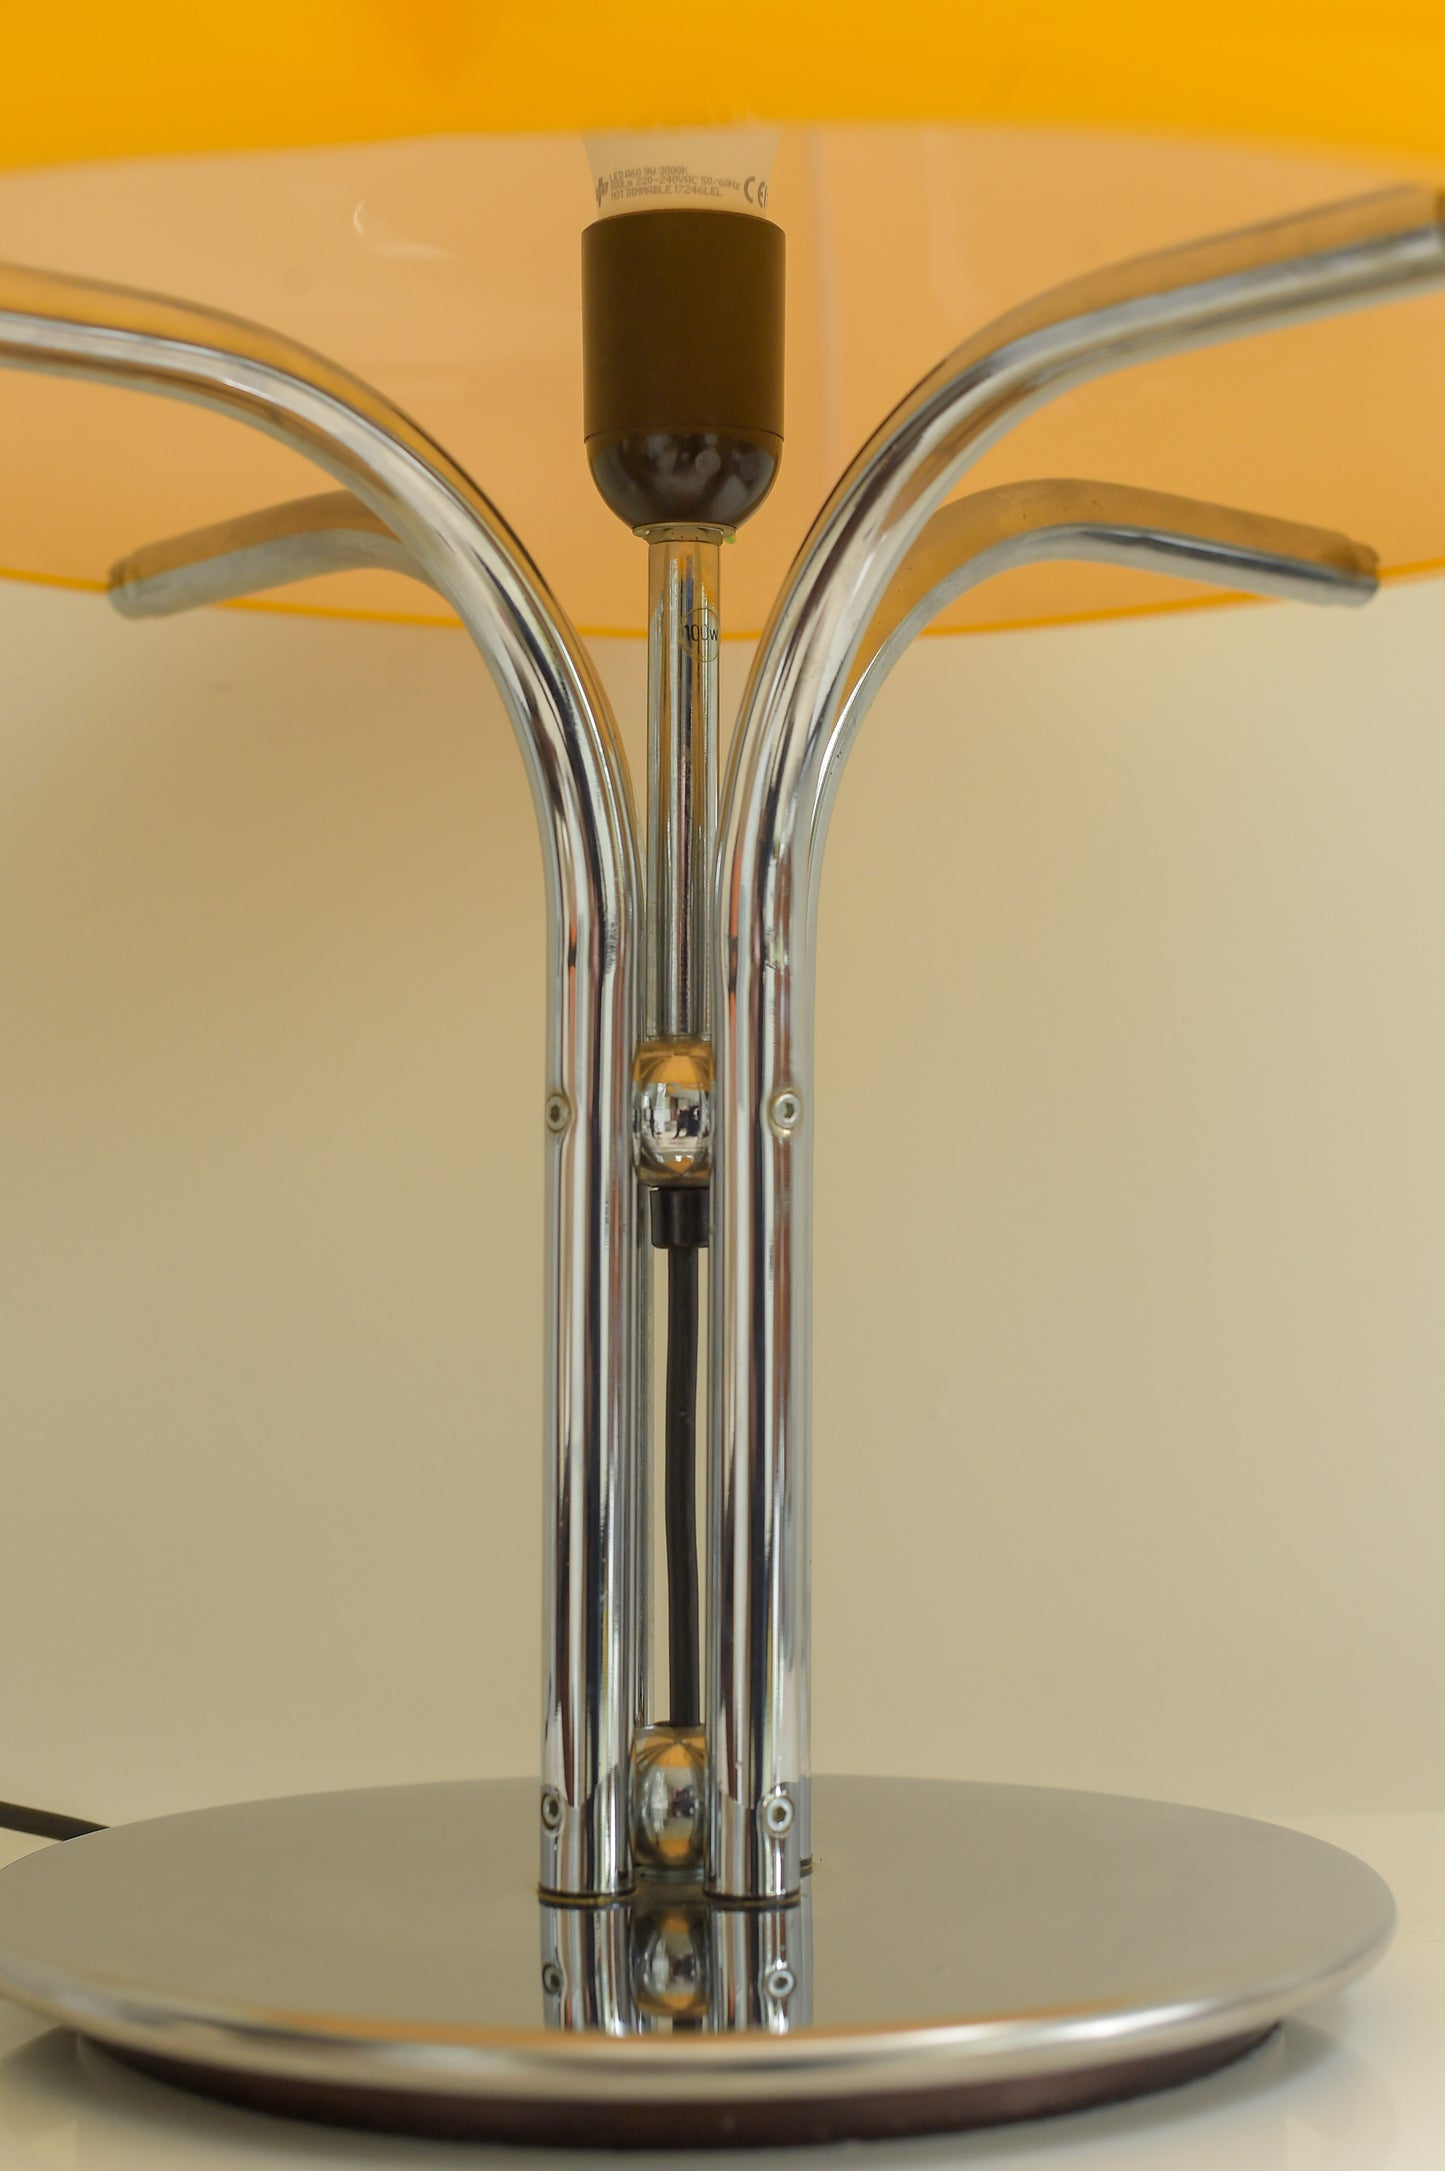 Rare Yellow Harvey Guzzini Quadrifoglio Table Lamp